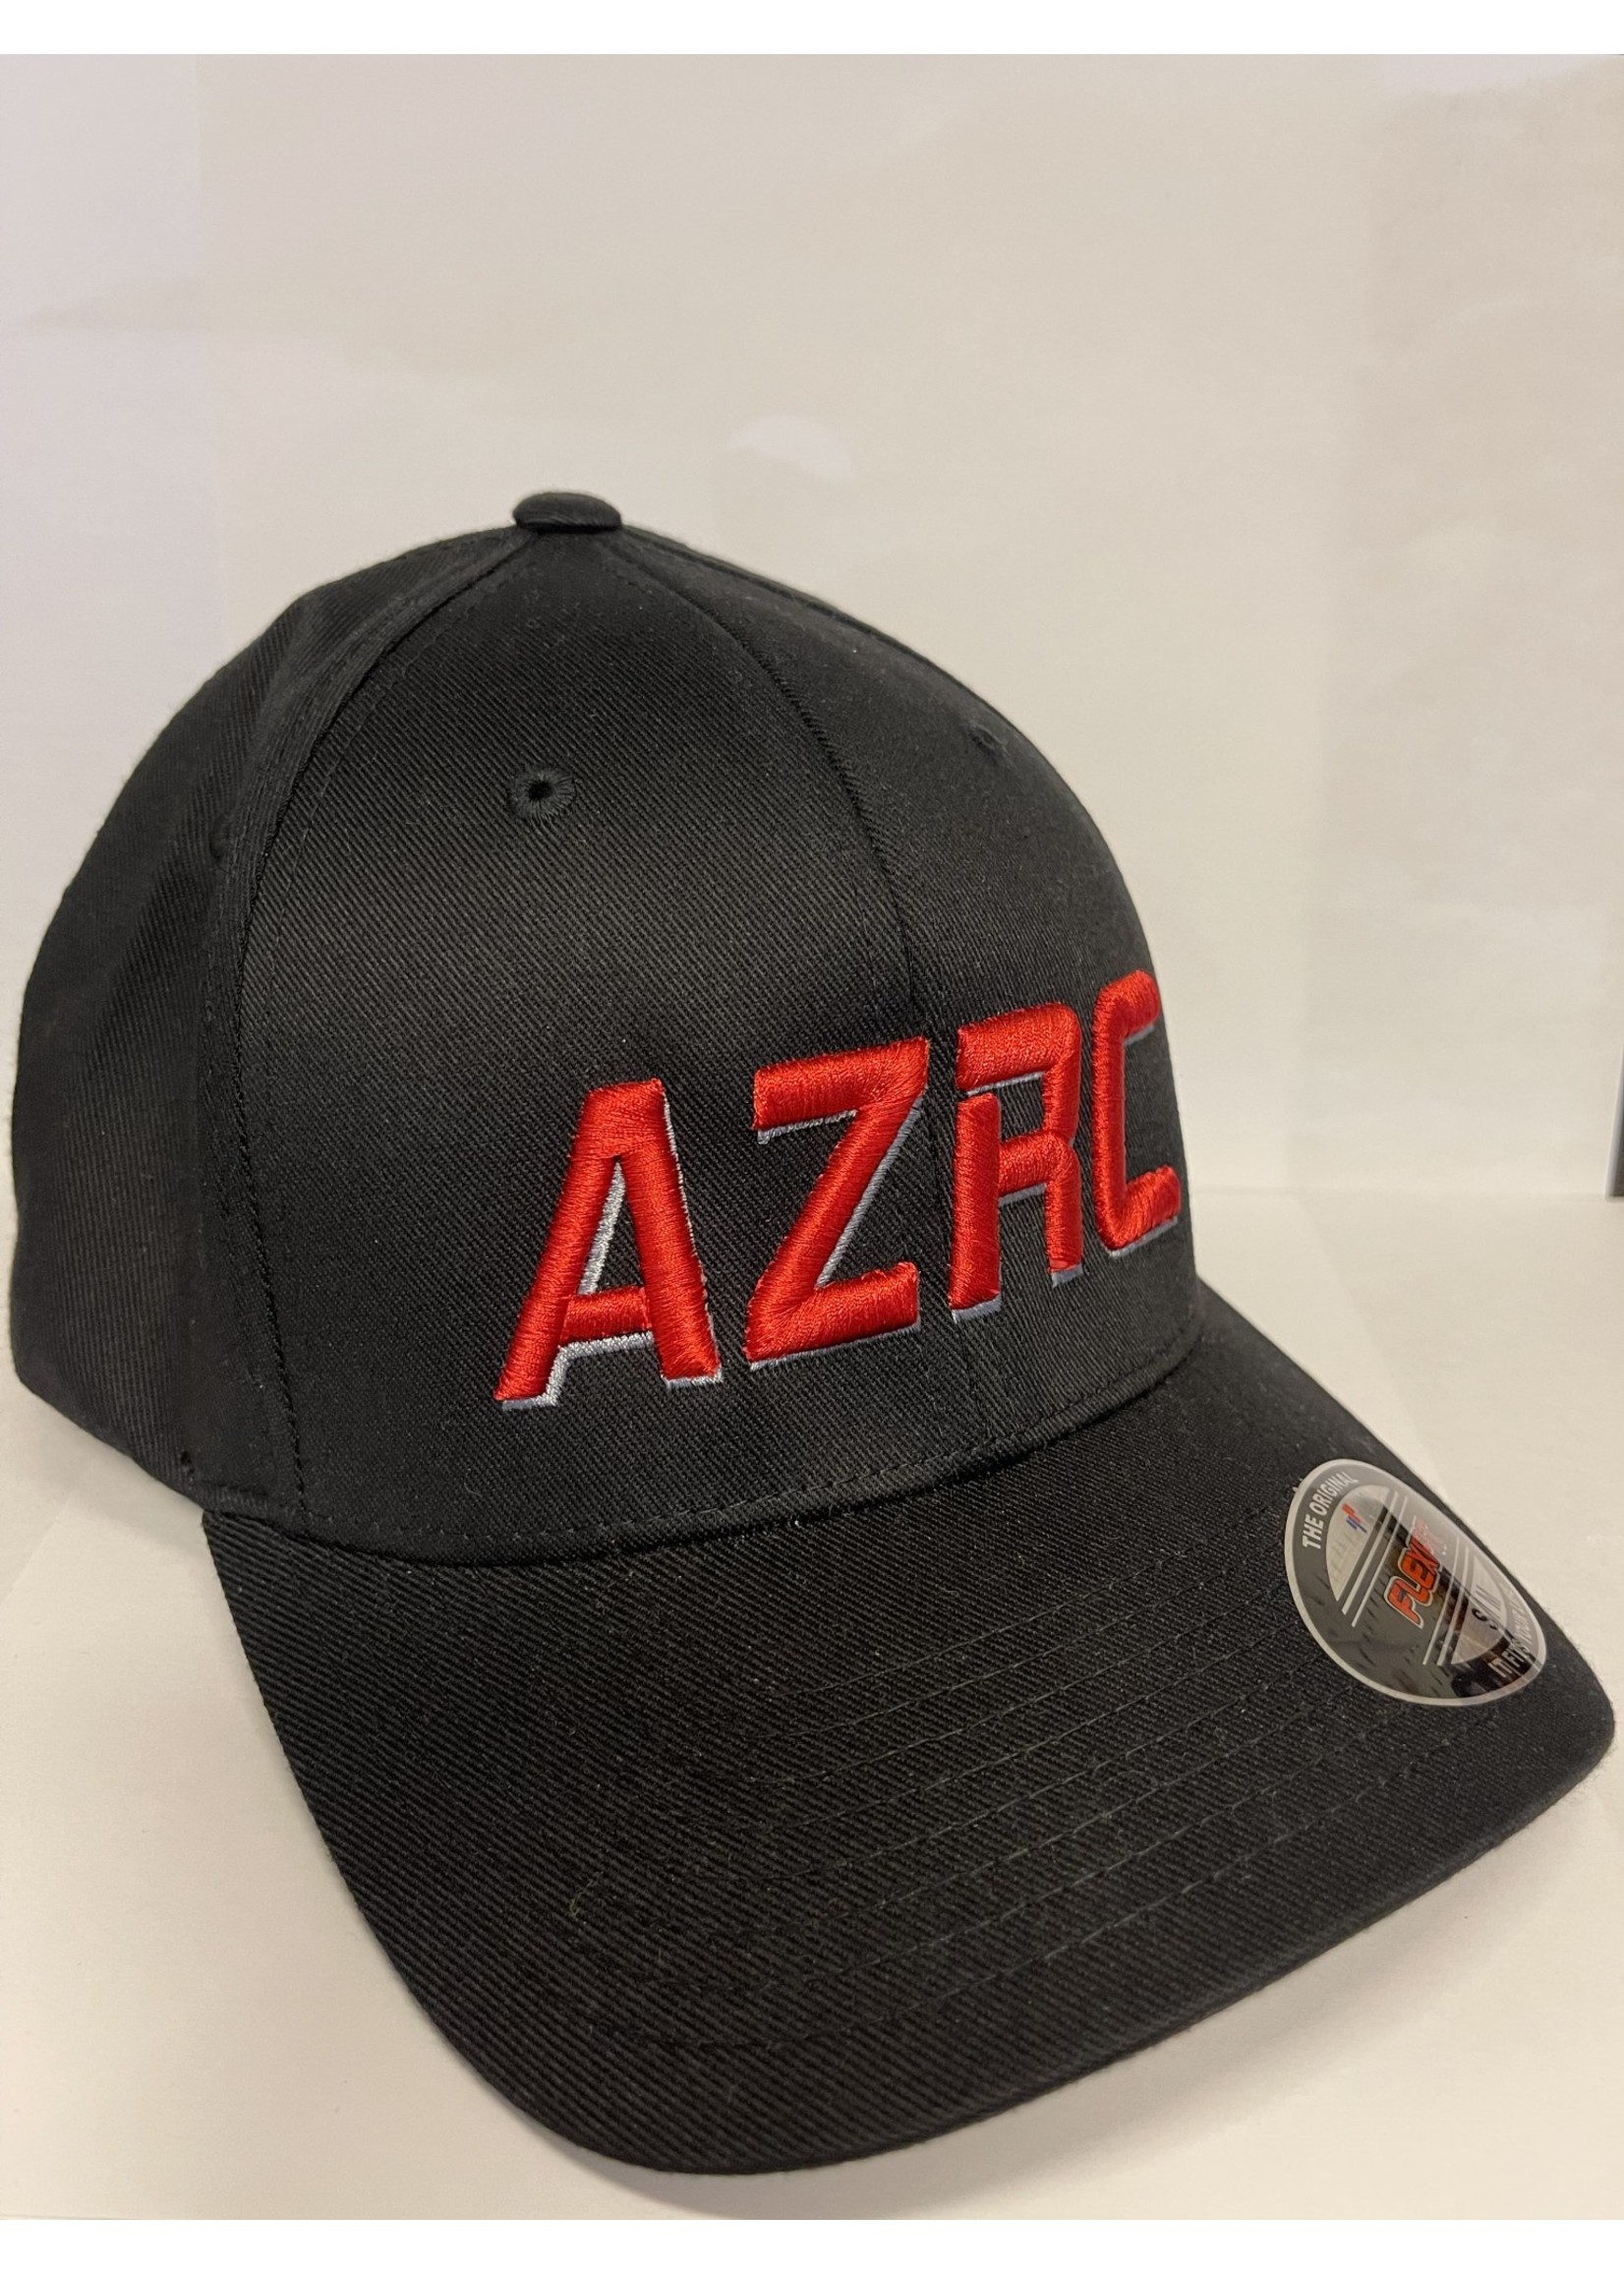 AZRC AZRC Flexfit Hat Black /Red (S/M)